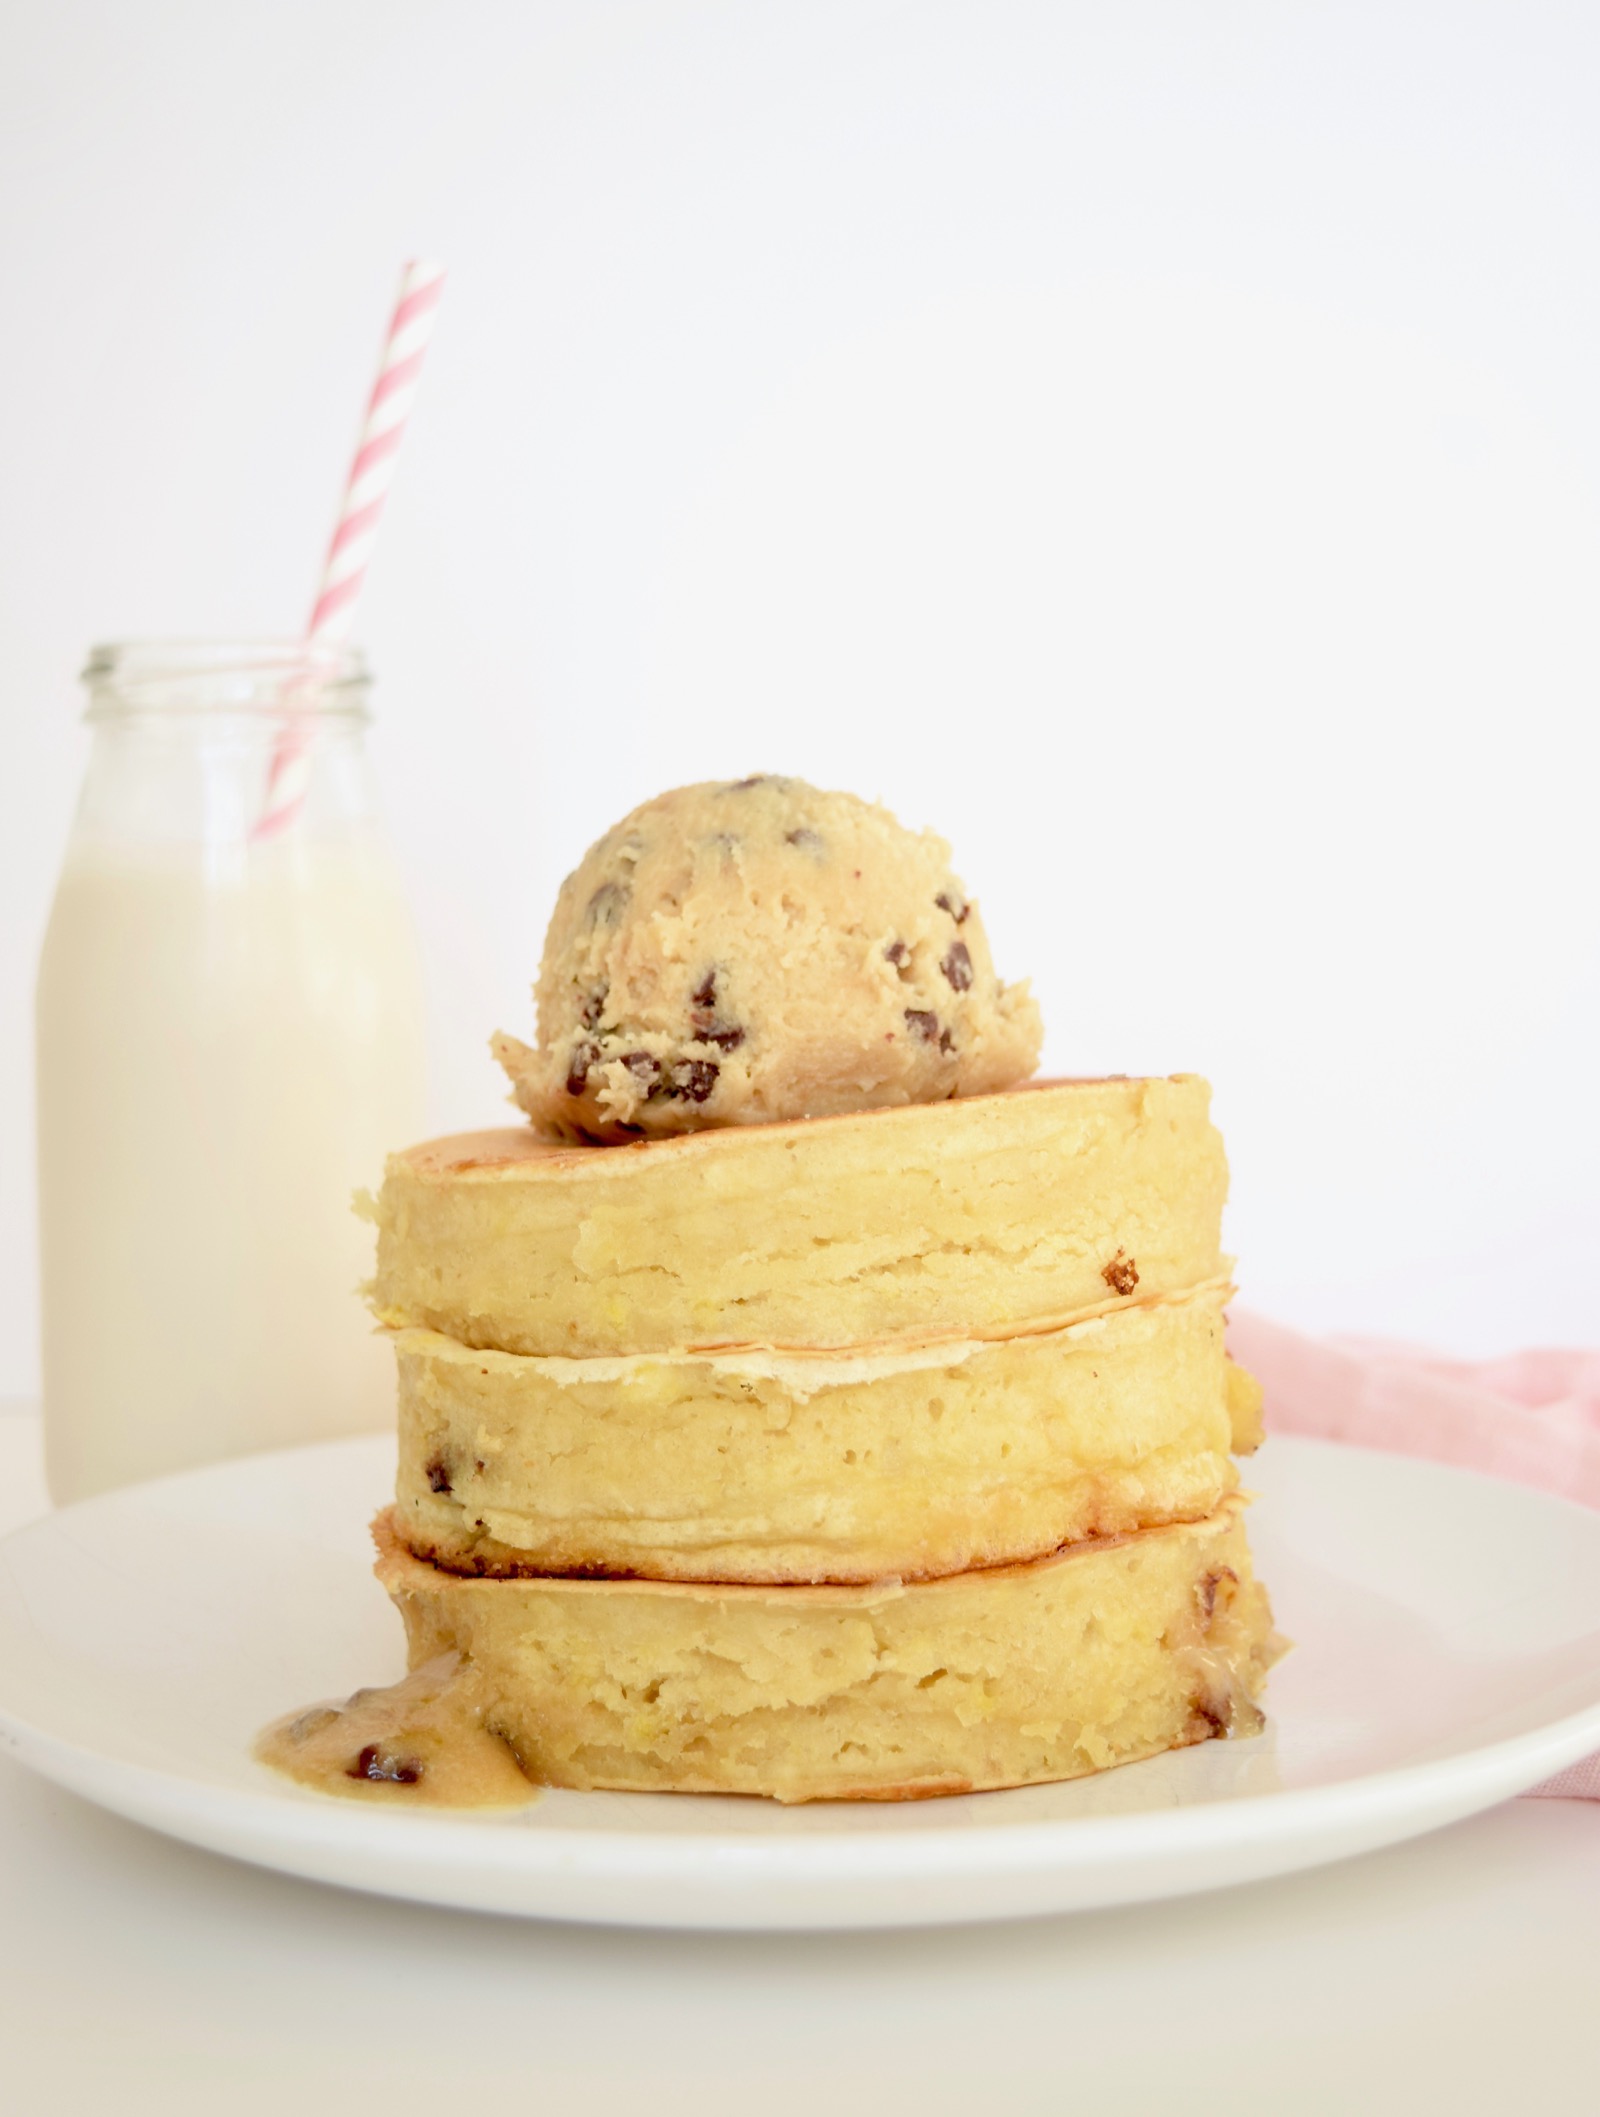 Cookie Dough Stuffed Pancakes